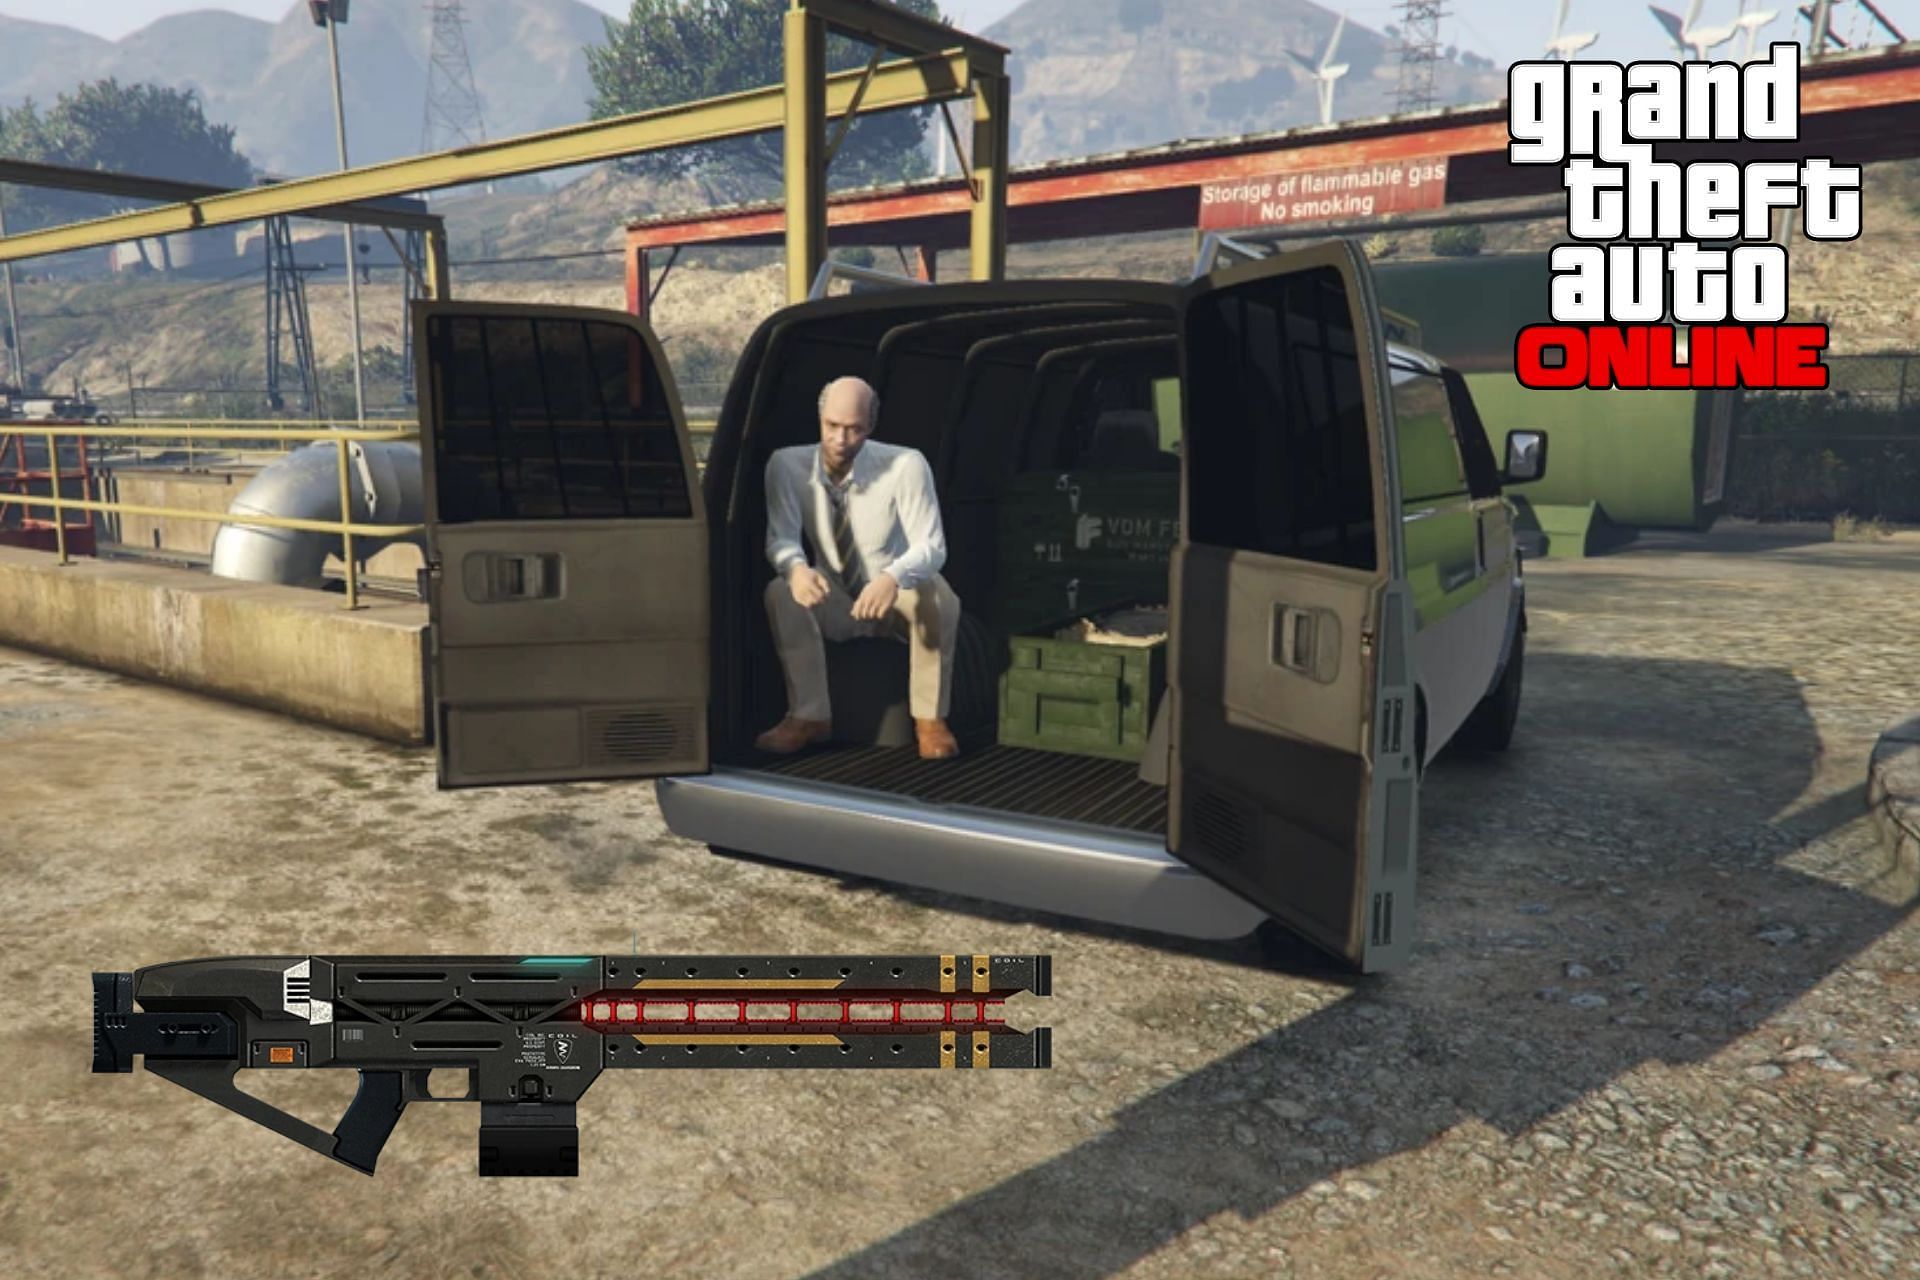 The Gun Van and Railgun are now available in GTA Online (Image via Sportskeeda)